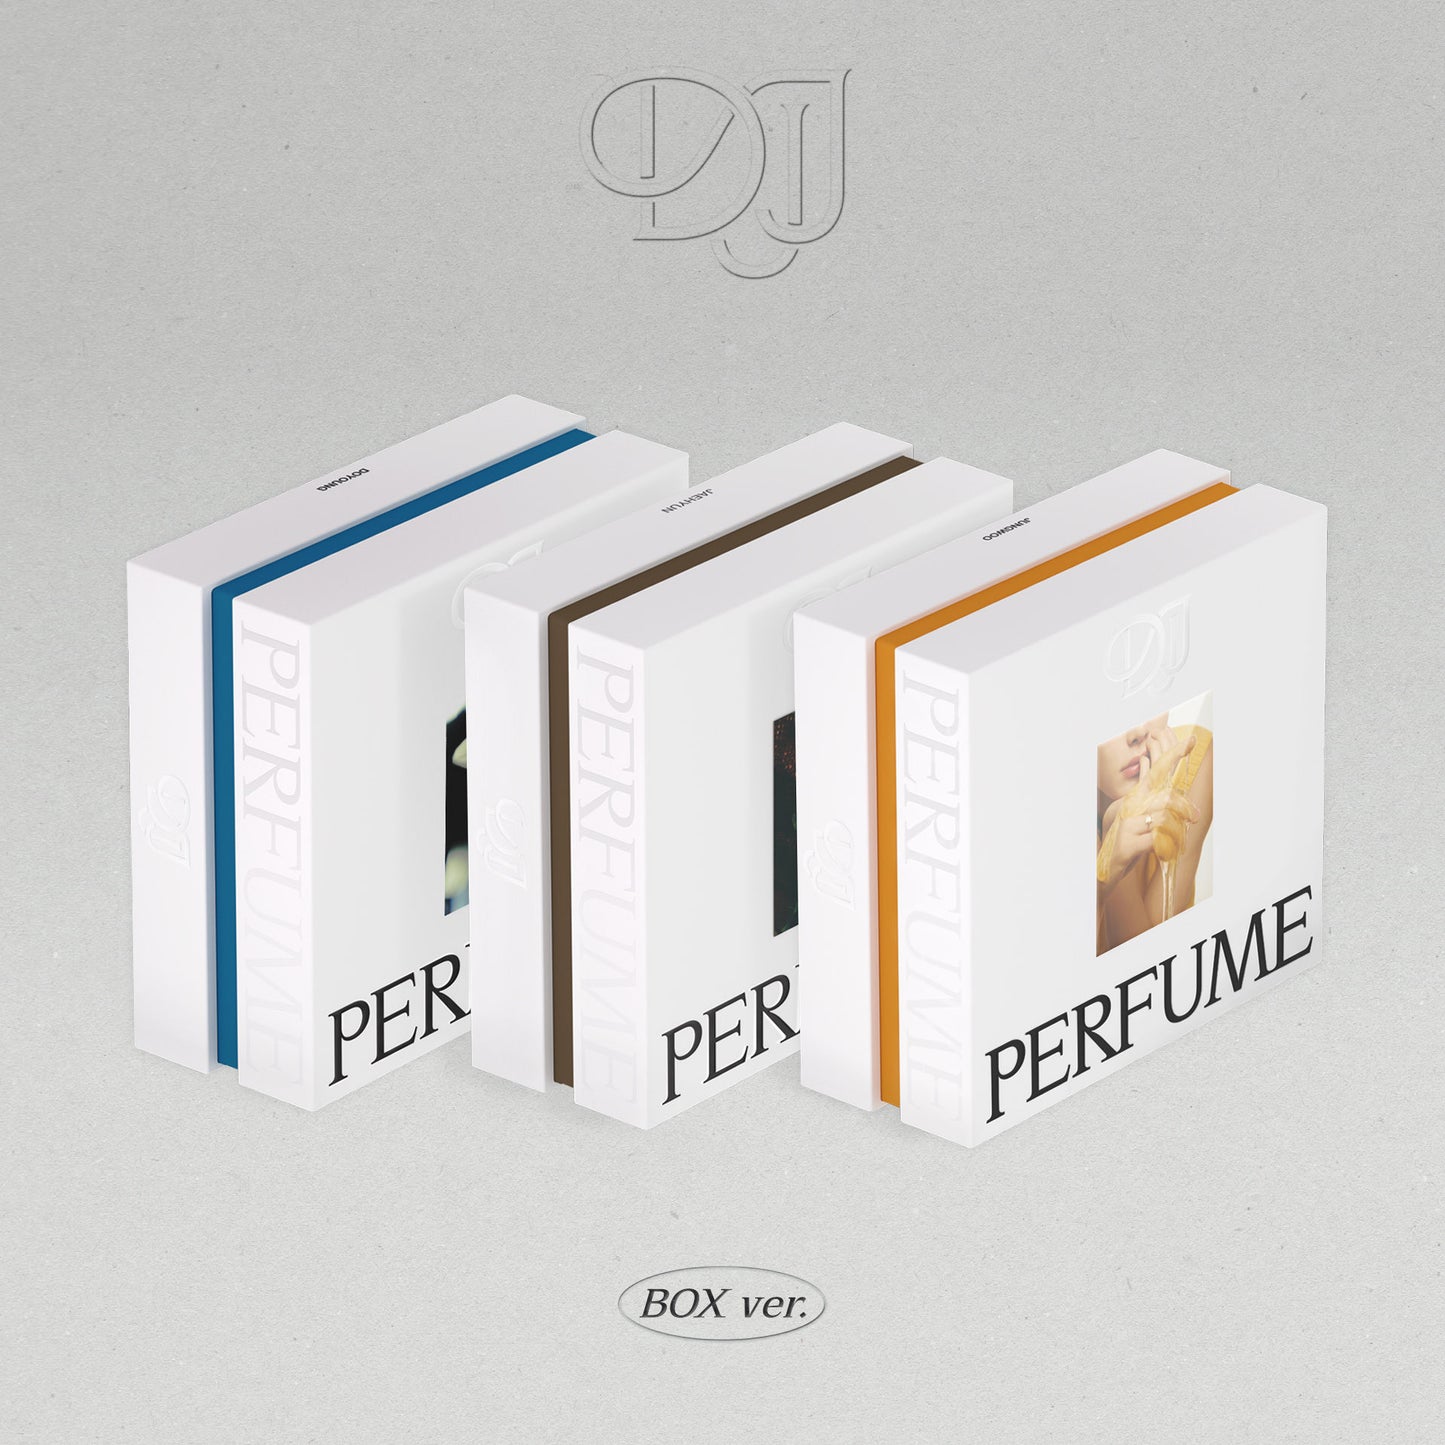 NCT DOJAEJUNG - PERFUME (1ST MINI ALBUM) BOX VER. (3 VERSIONS)